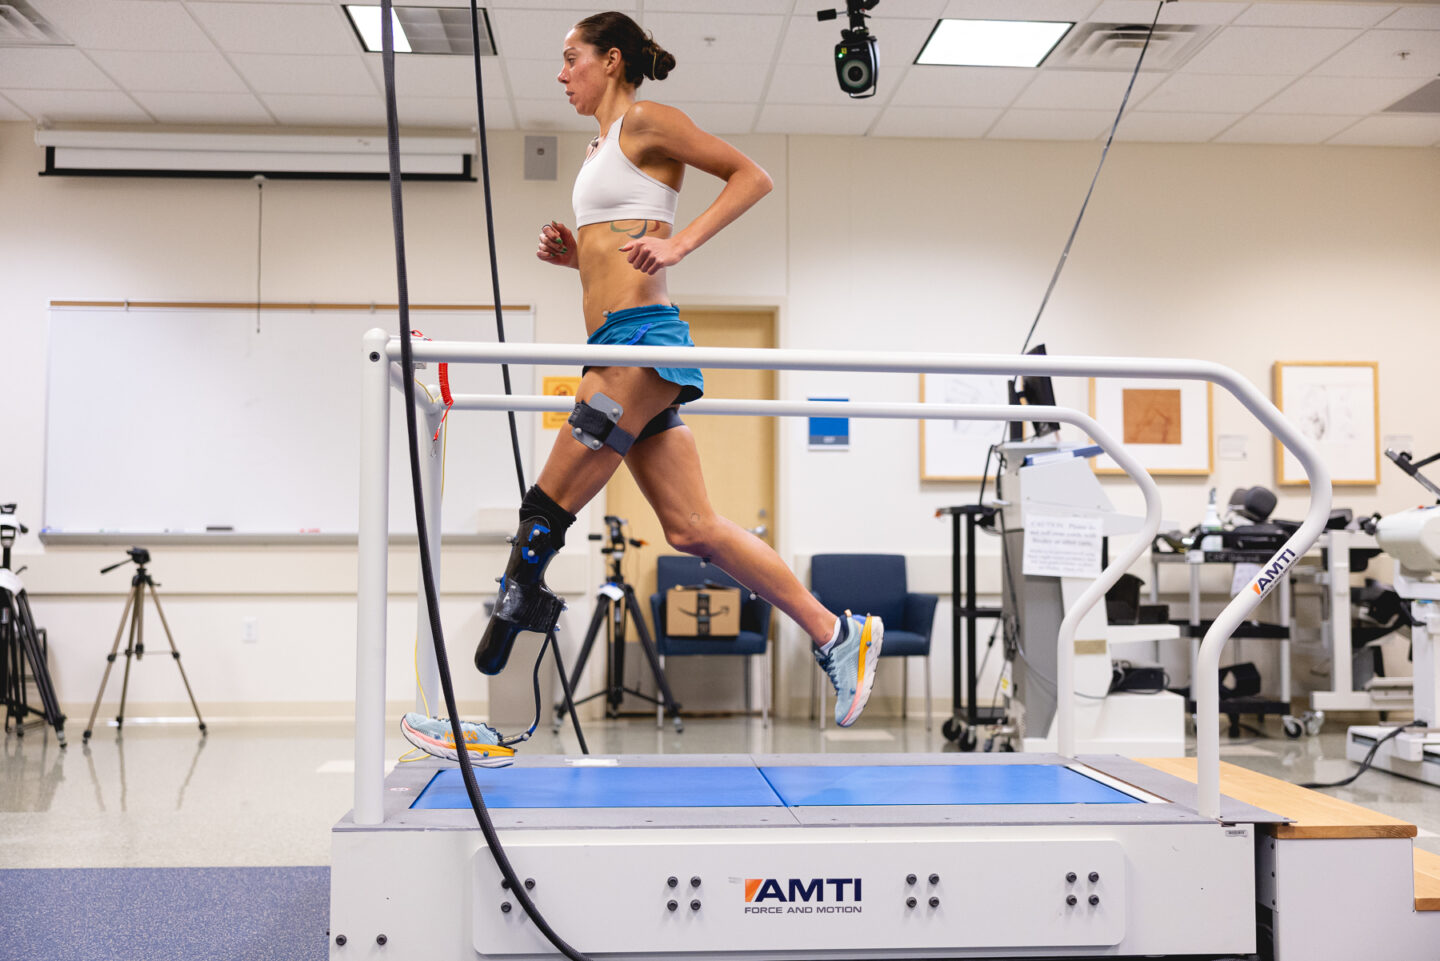 Runner with prosthetic leg undergoing gait analysis on treadmill.